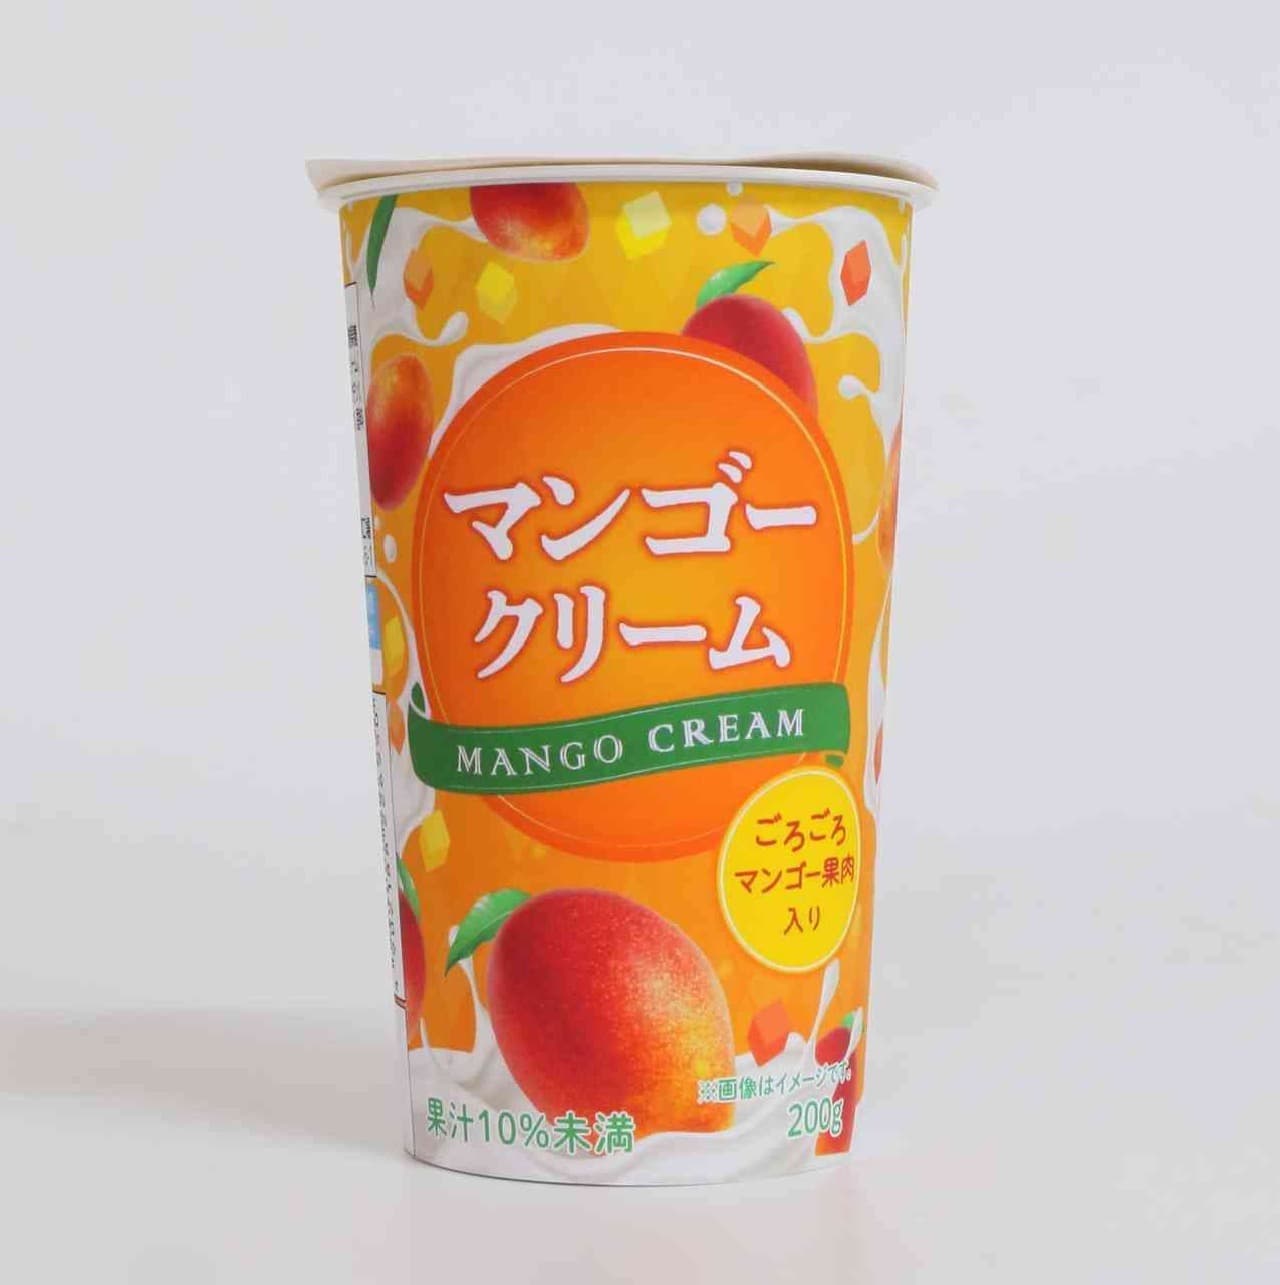 Famima "Mango Cream